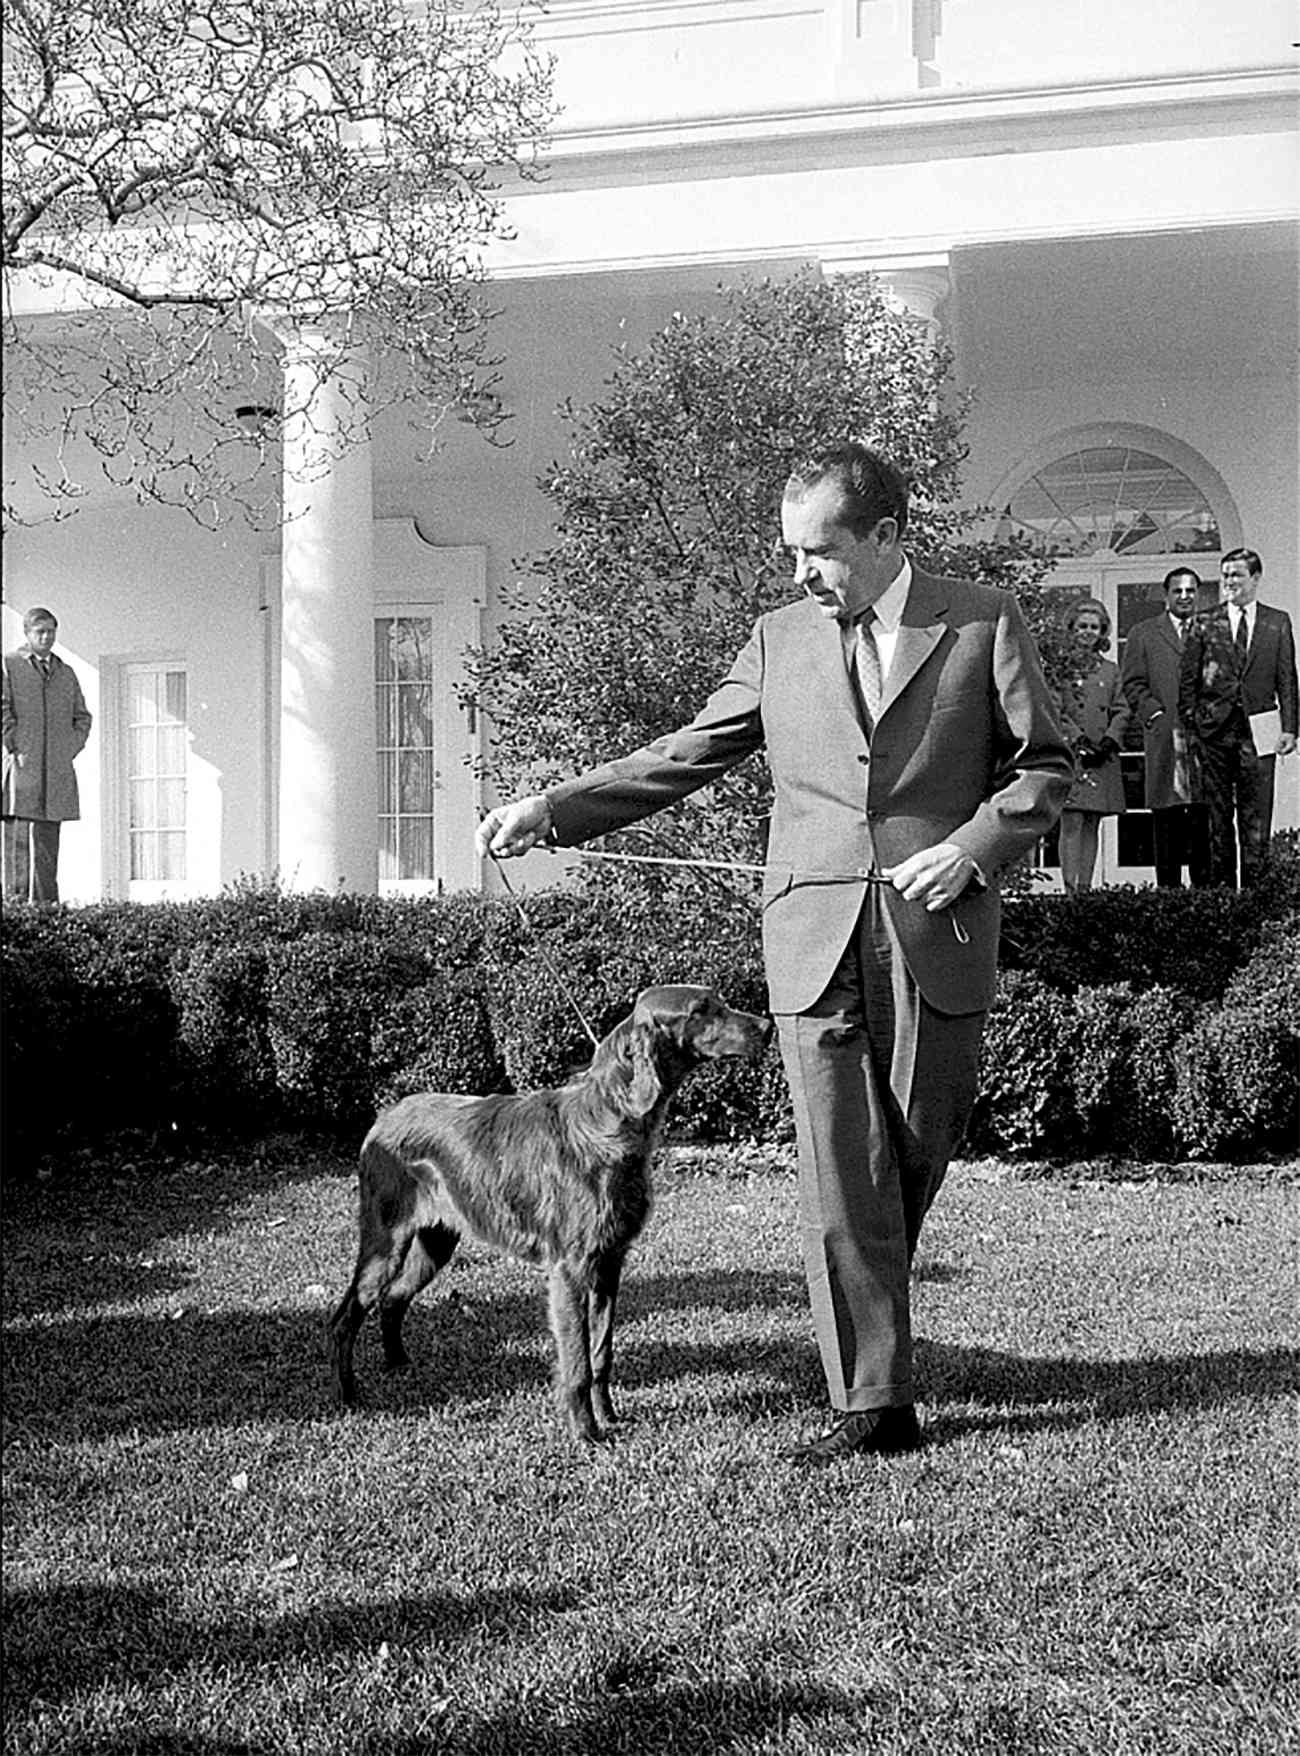 Photograph of Richard Nixon walking dog on lawn of White House